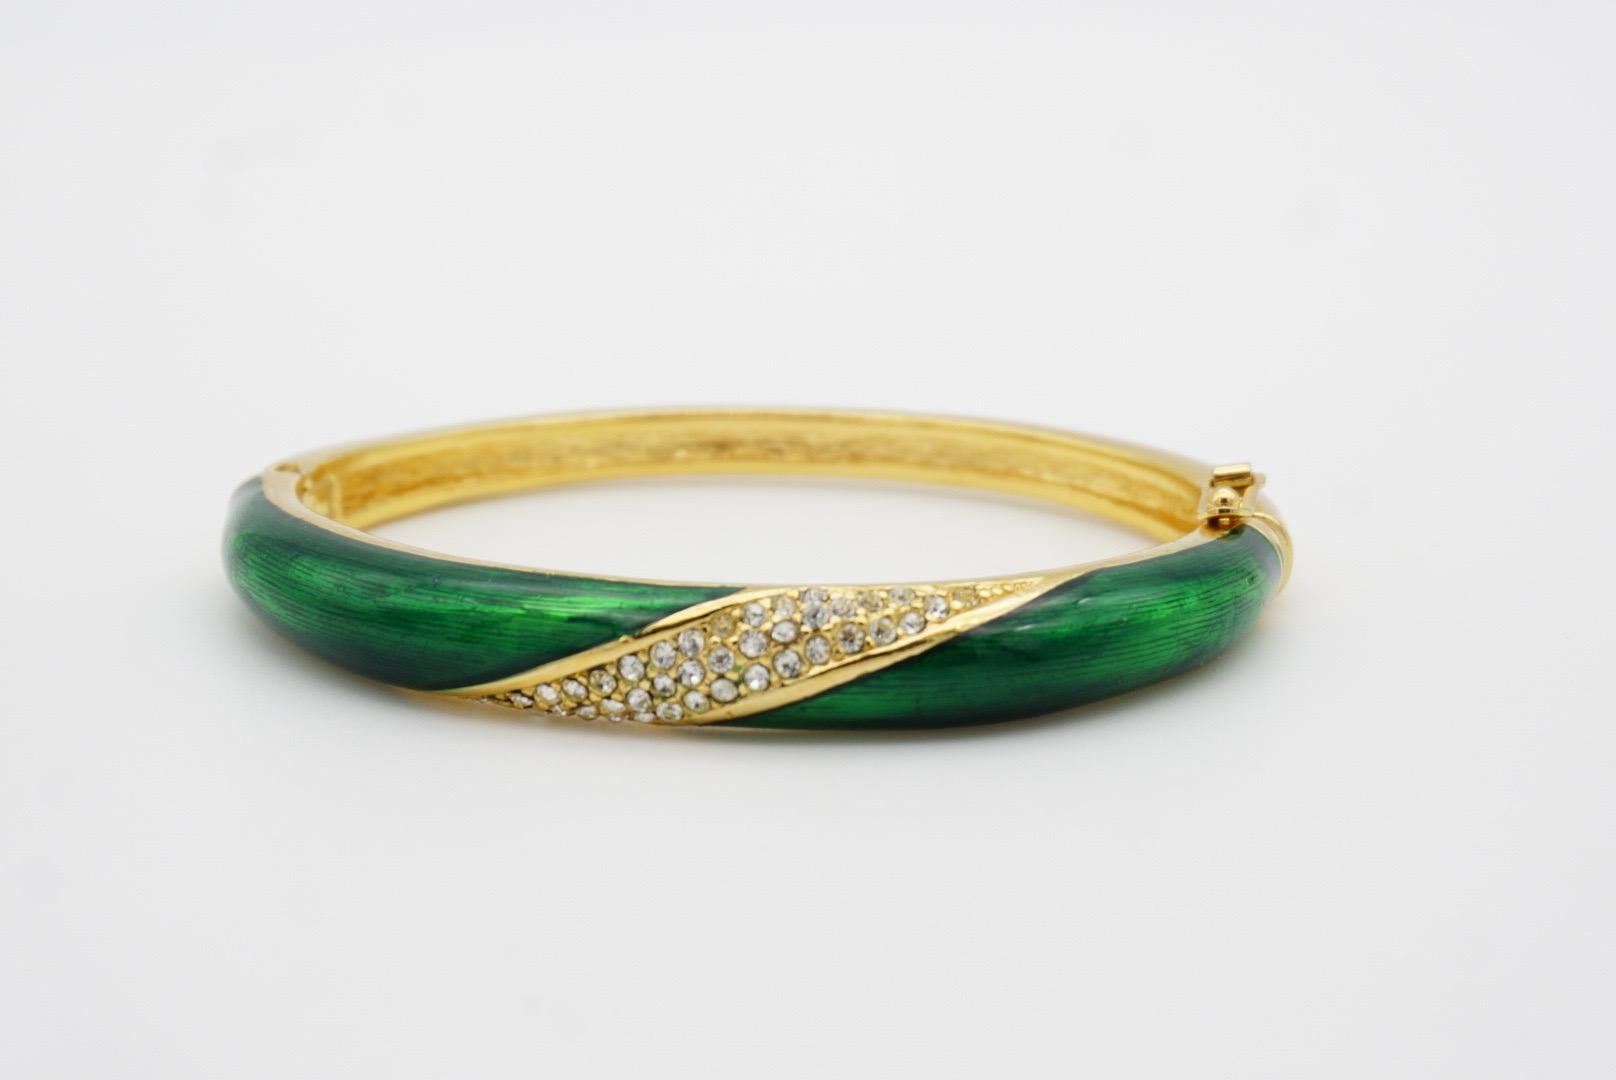 Christian Dior 1980s Vintage Emerald Green Enamel Crystals Cuff Bangle Bracelet For Sale 6